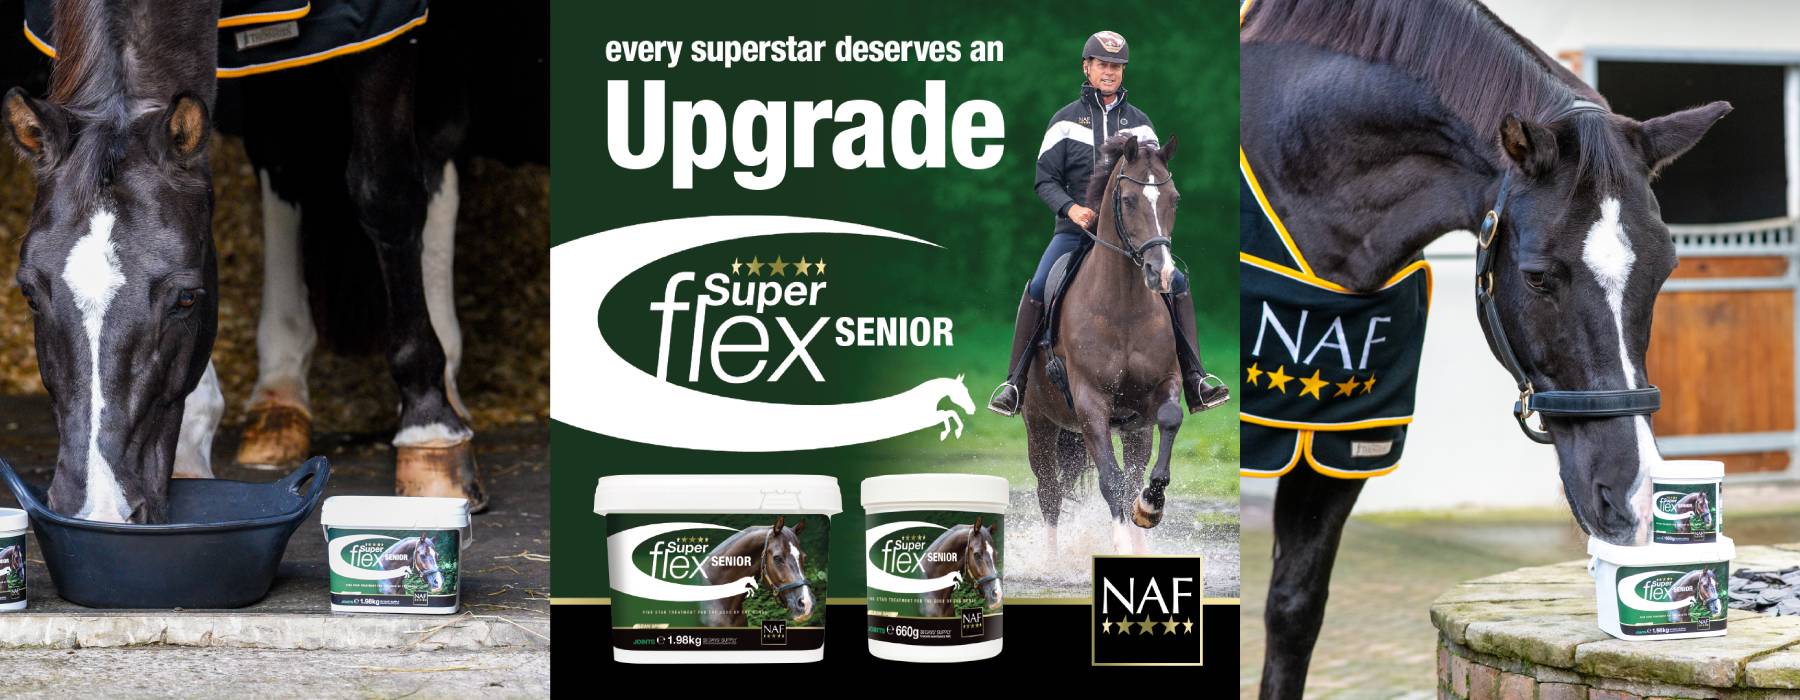 NAF Superflex Senior - Every Superstar Deserves an Upgrade